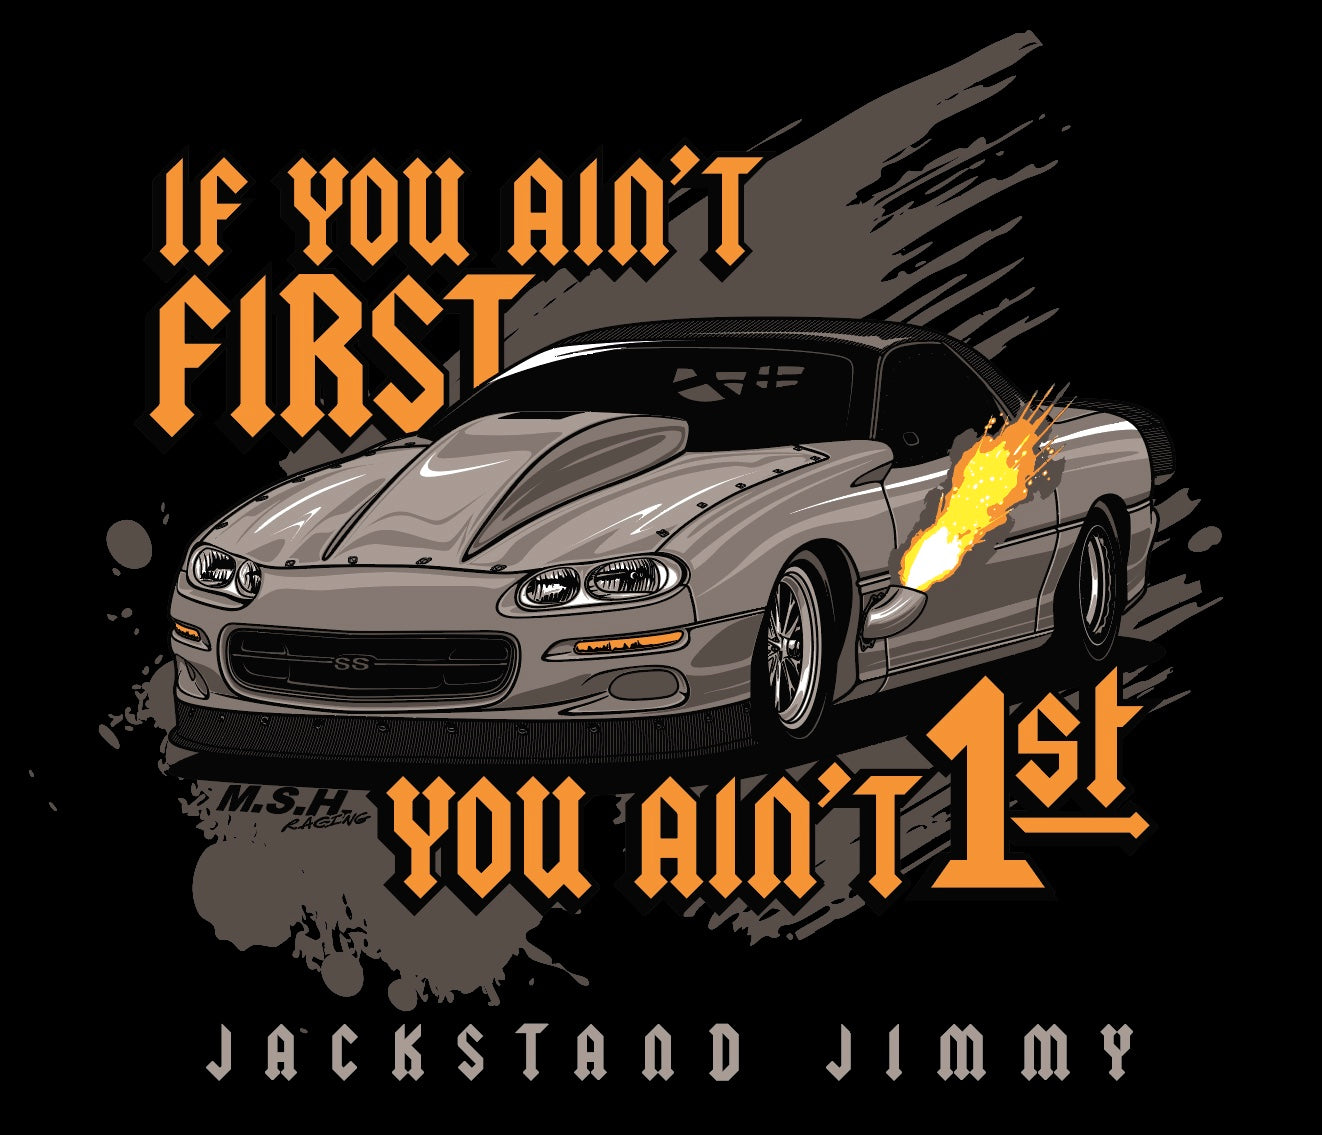 Jackstand Jimmy's Ain't First Camaro Shirt